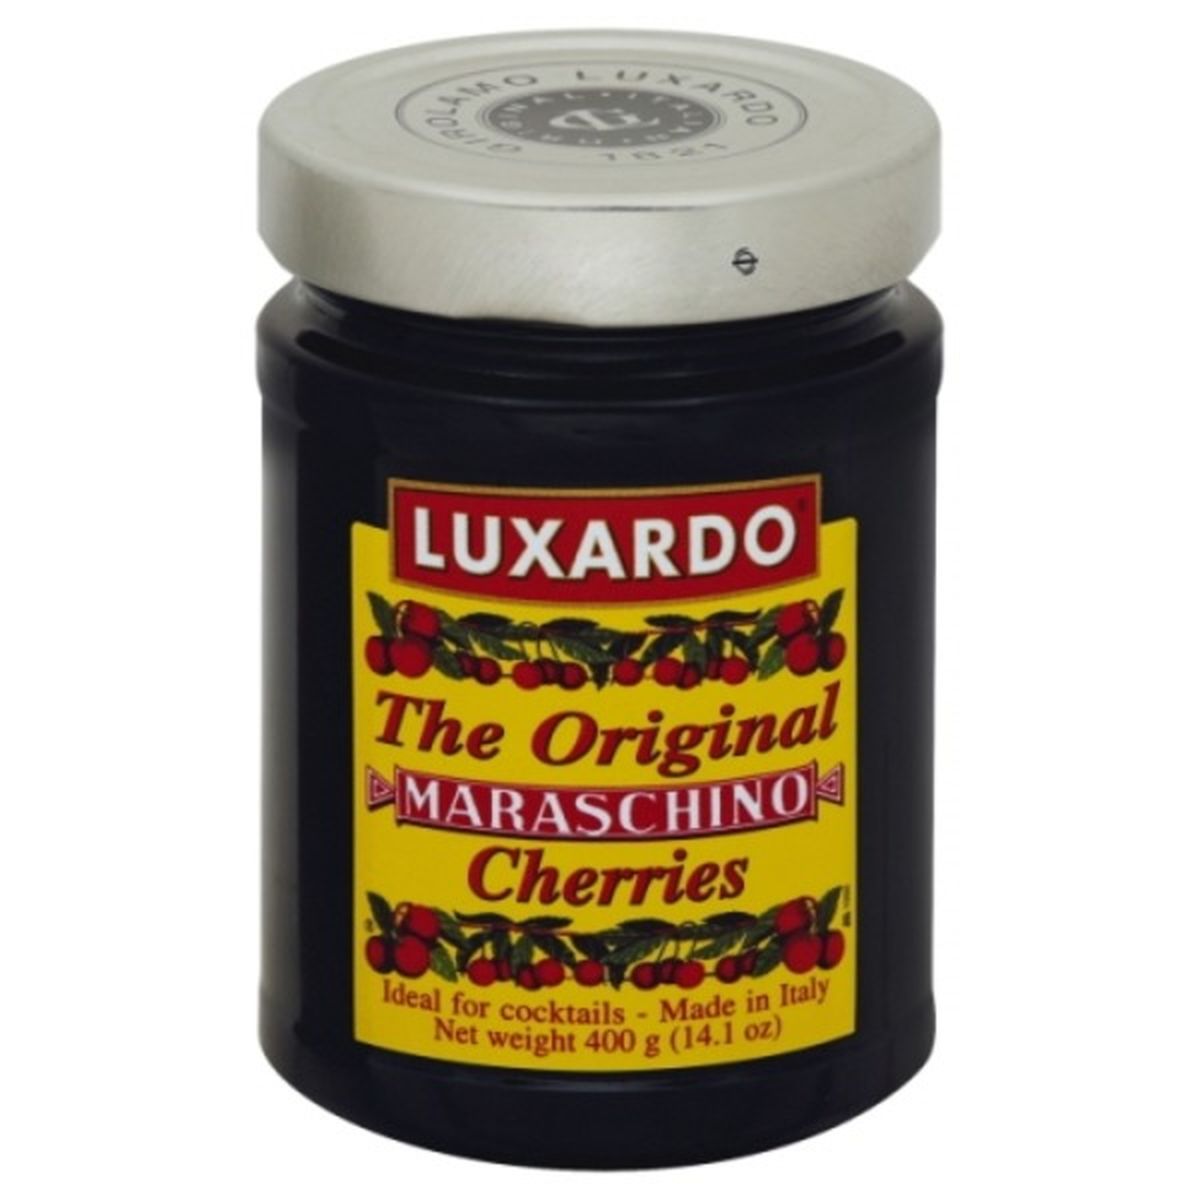 Calories in Luxardo Cherries, Maraschino, The Original